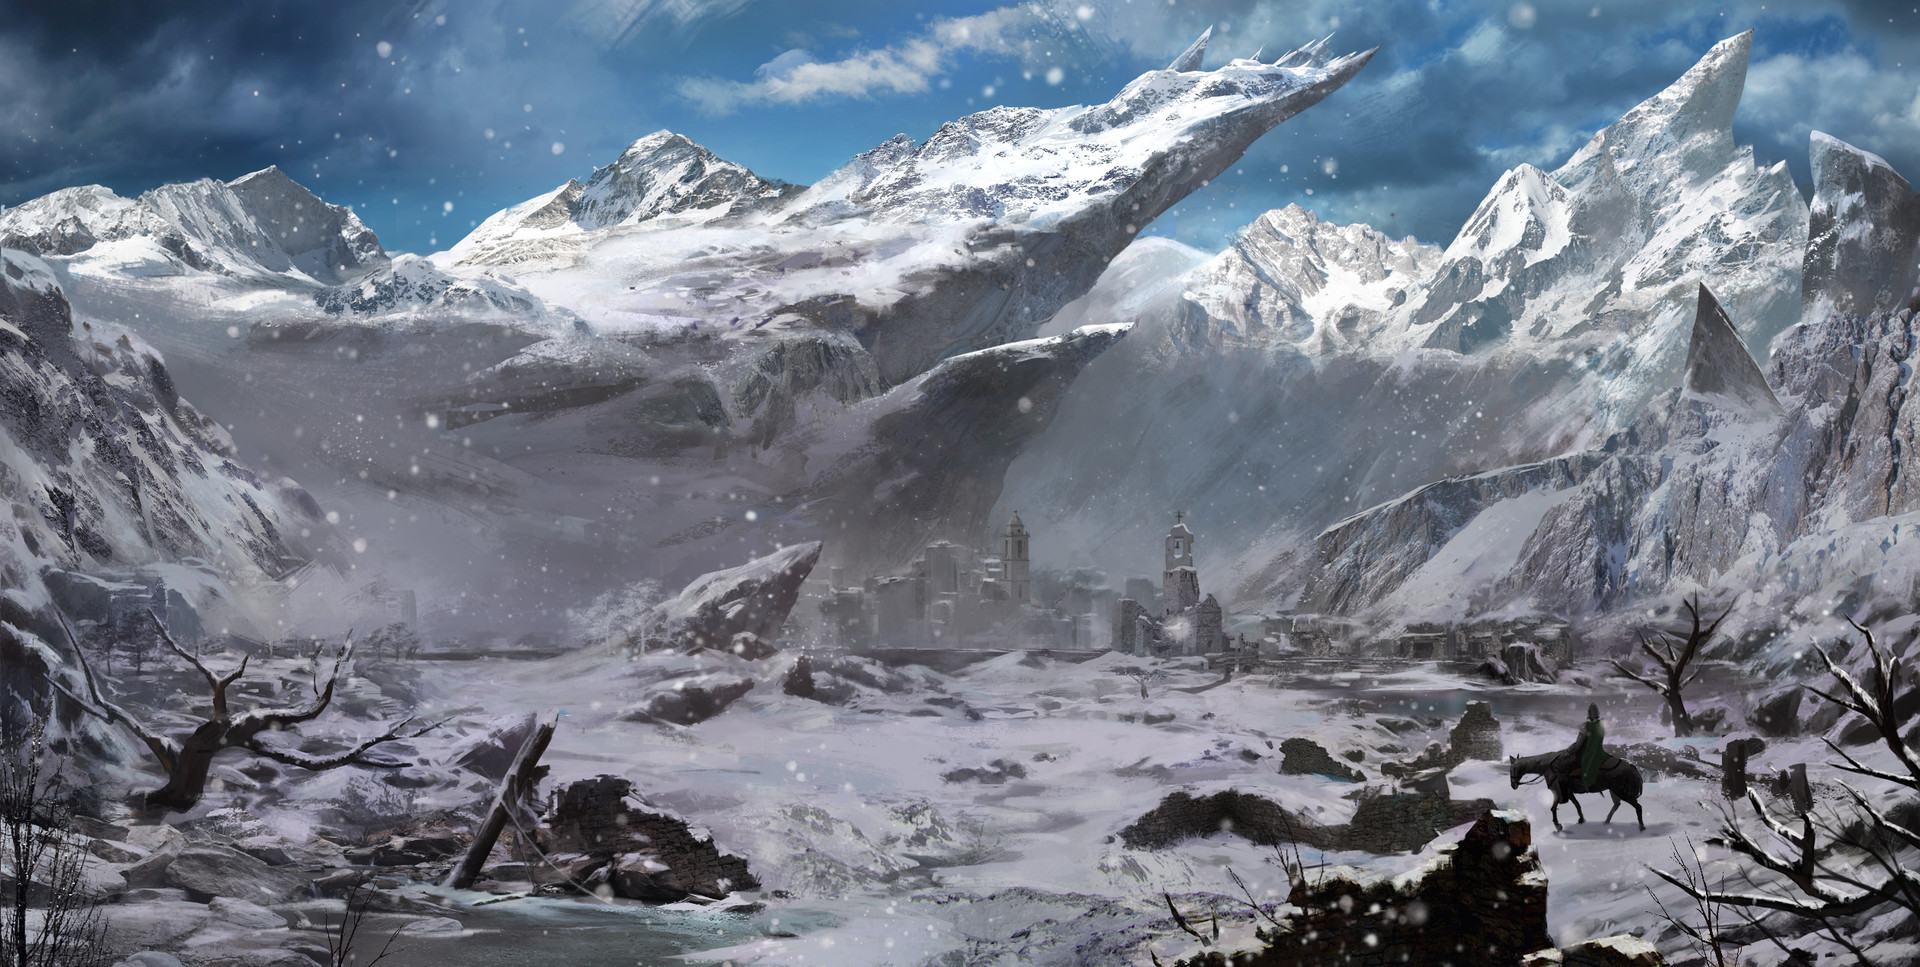 General 1920x967 SY-37 digital art fantasy art ruins snow snowy mountain mountains horse Abandoned city